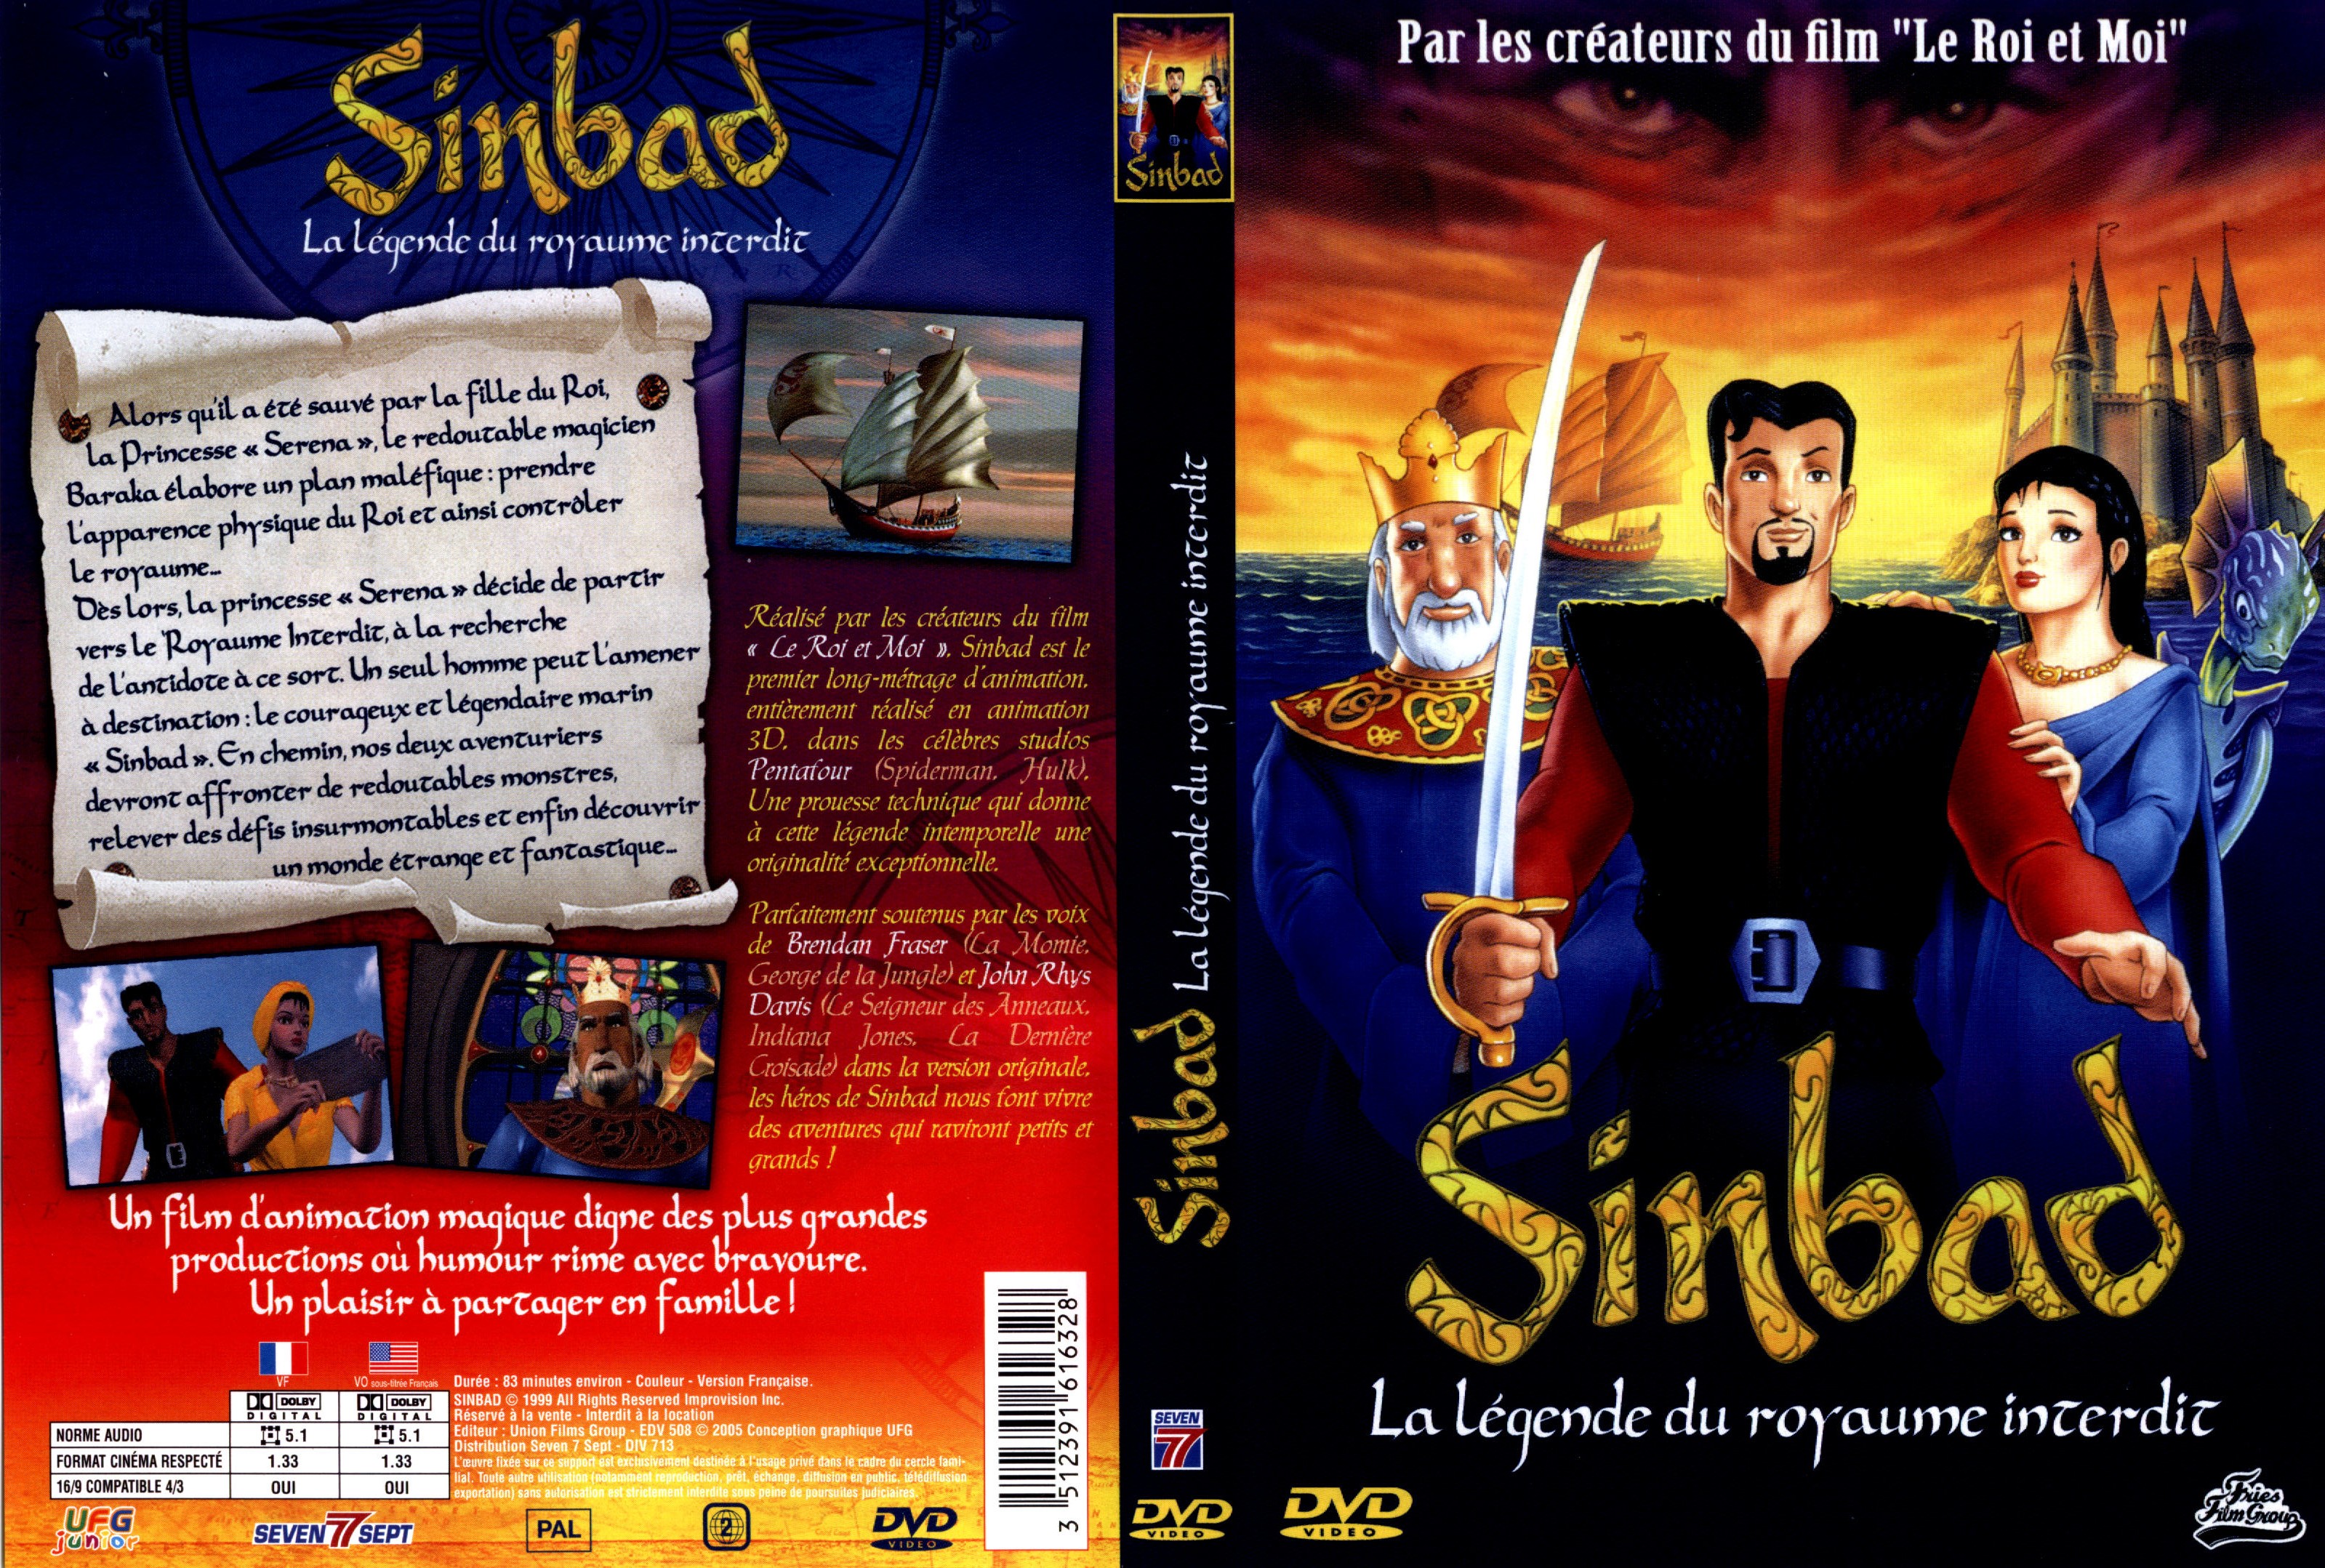 Jaquette DVD Sinbad la lgende du royaume interdit